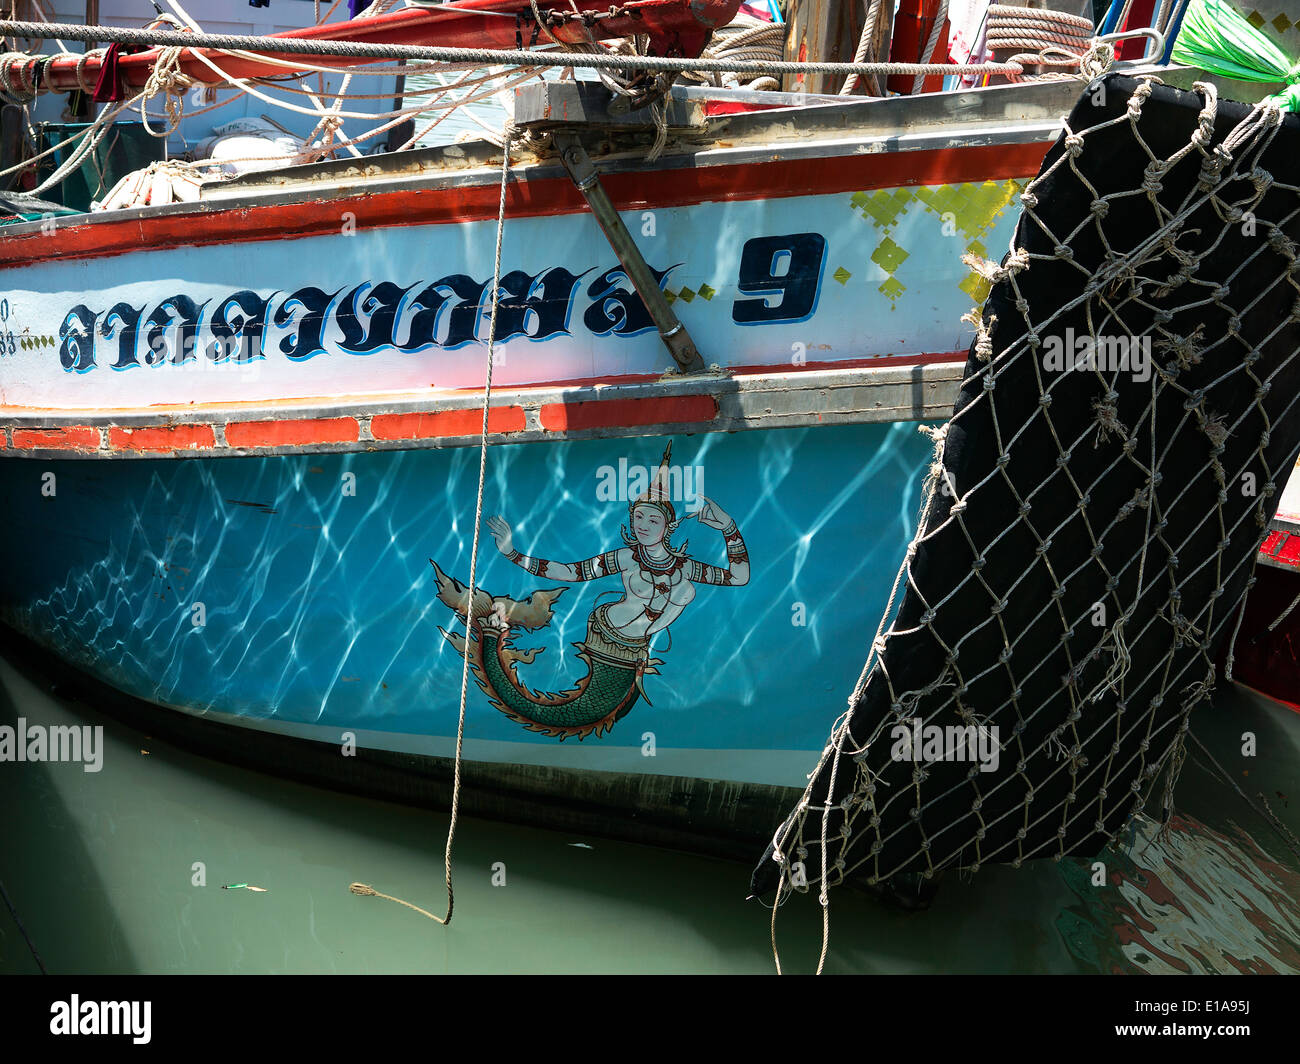 Thailande port de peche de Phuket, fishing port of Phuket, boats, drawing, Stock Photo